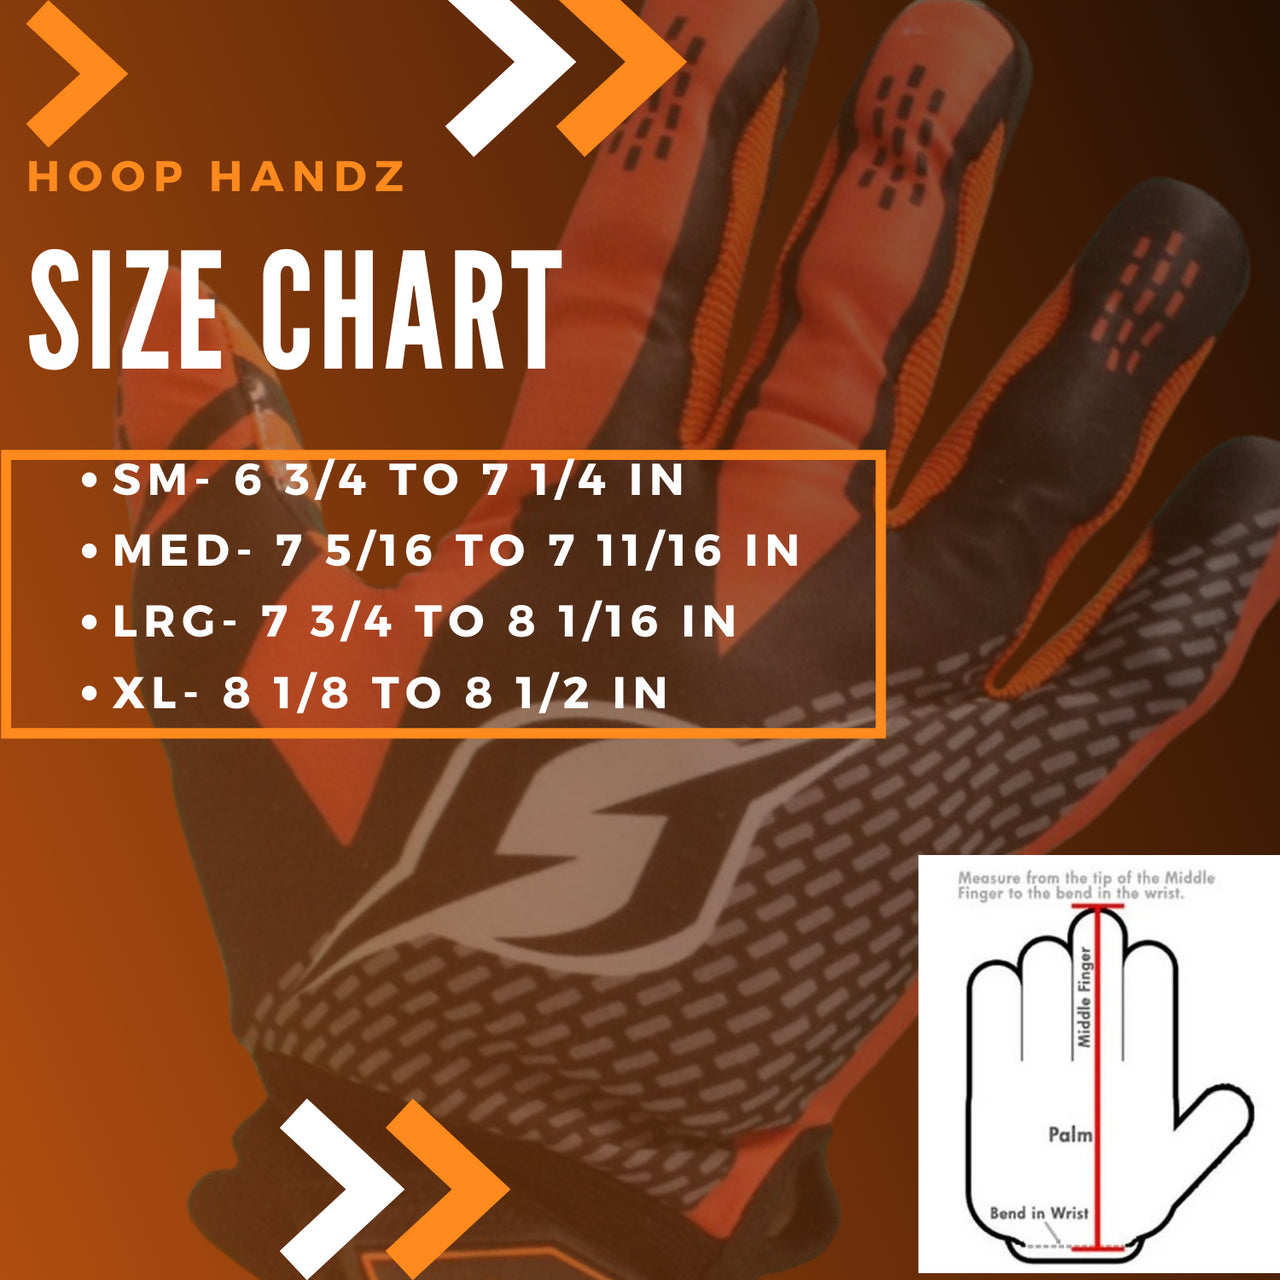 Hoop Handz weighted basketball gloves size chart